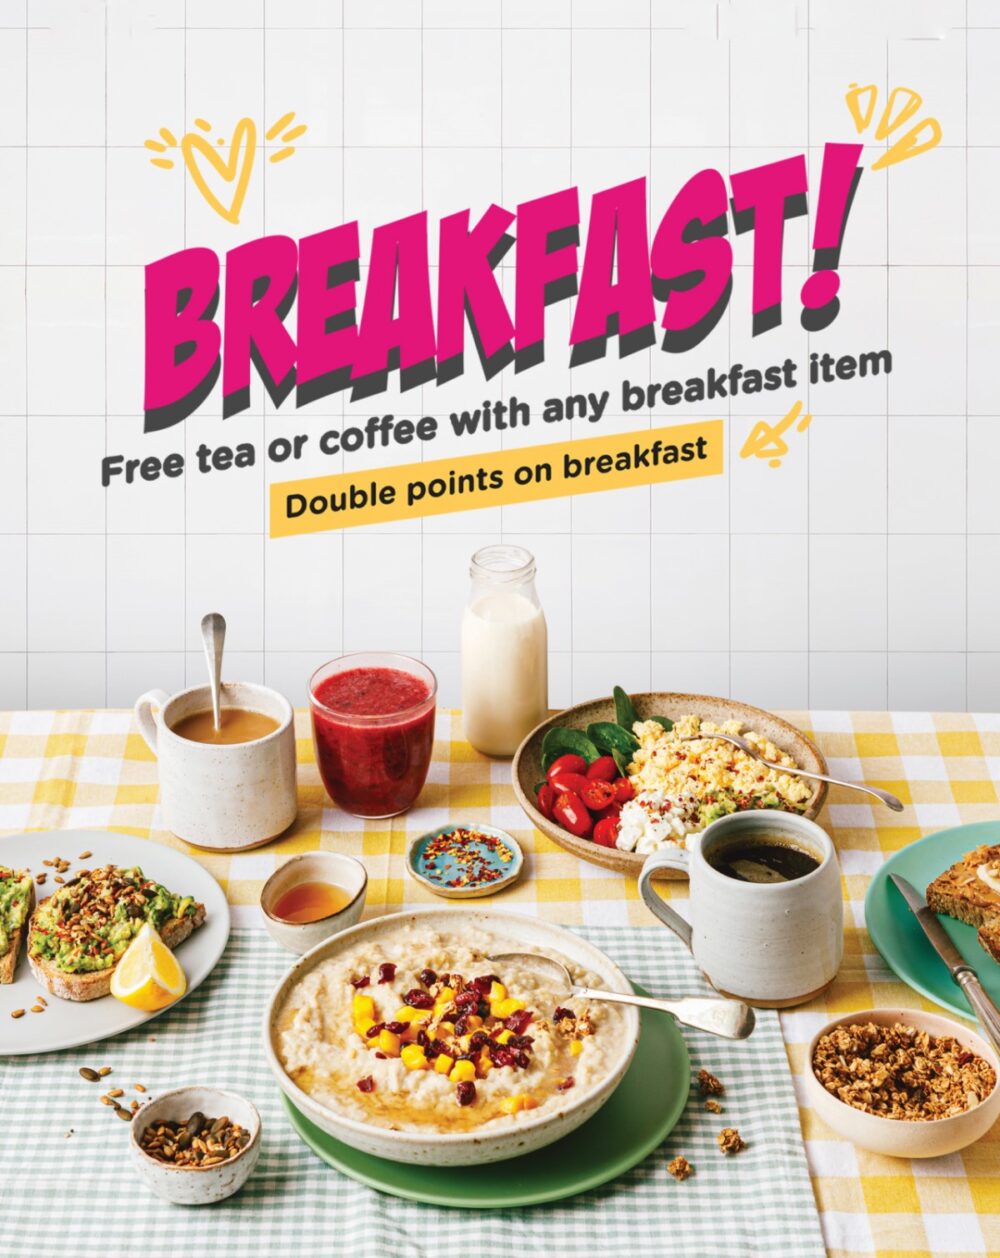 Tossed breakfast promo image